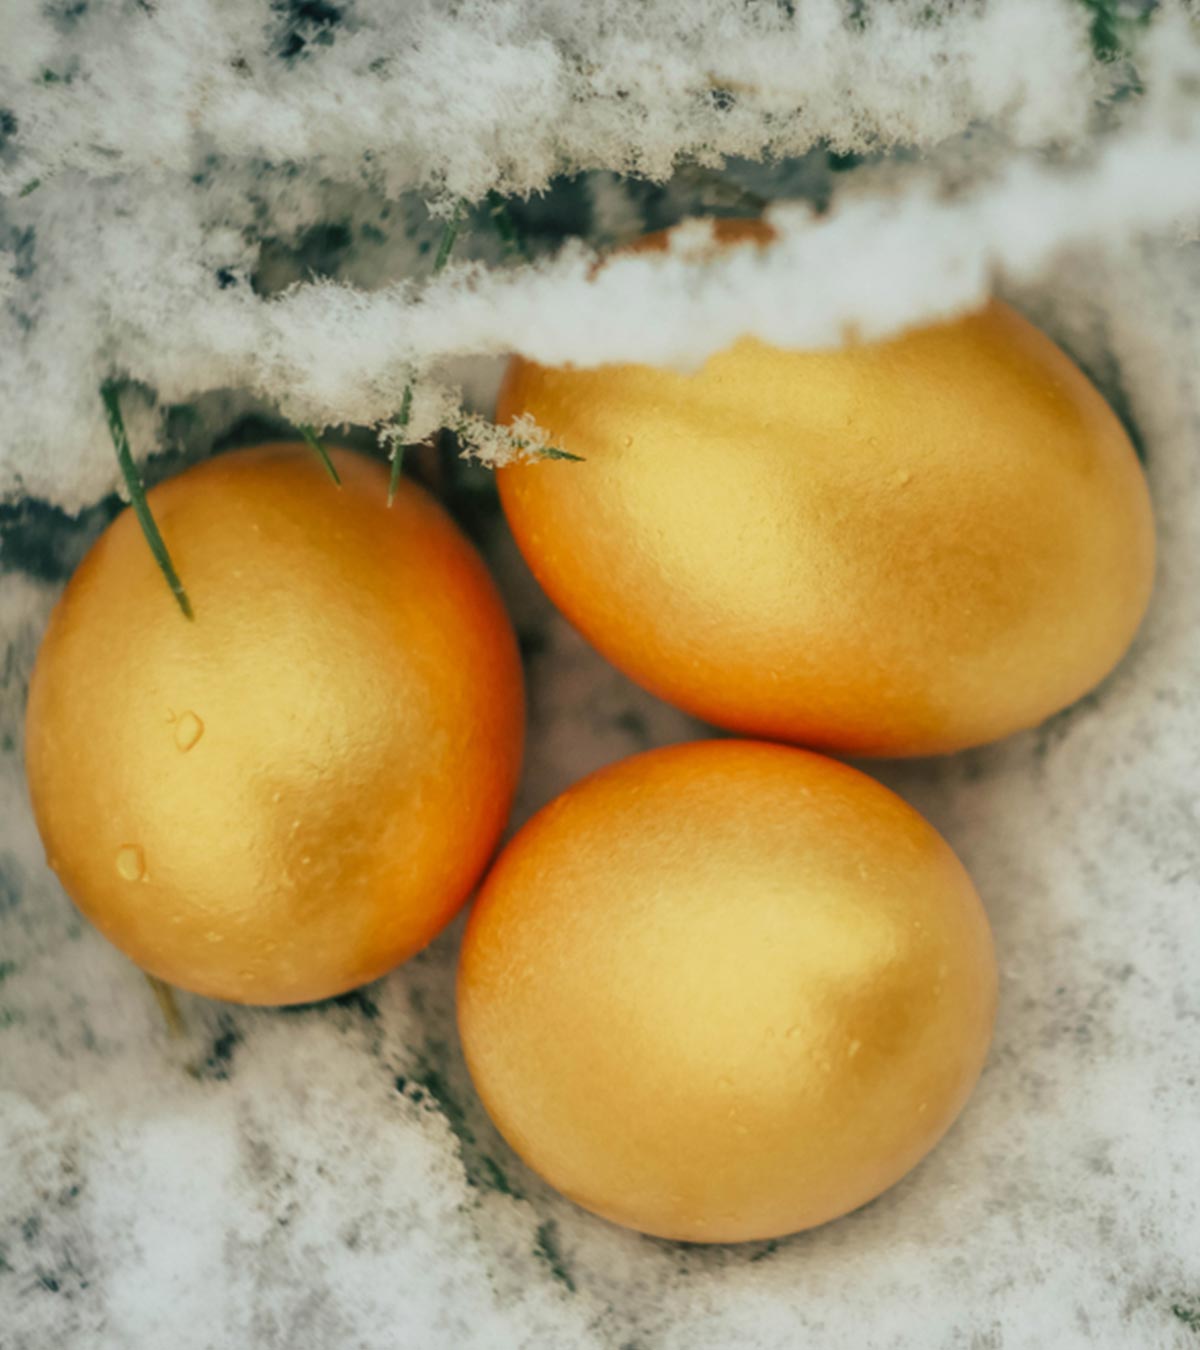 Freezing Eggs: Should You Do It?